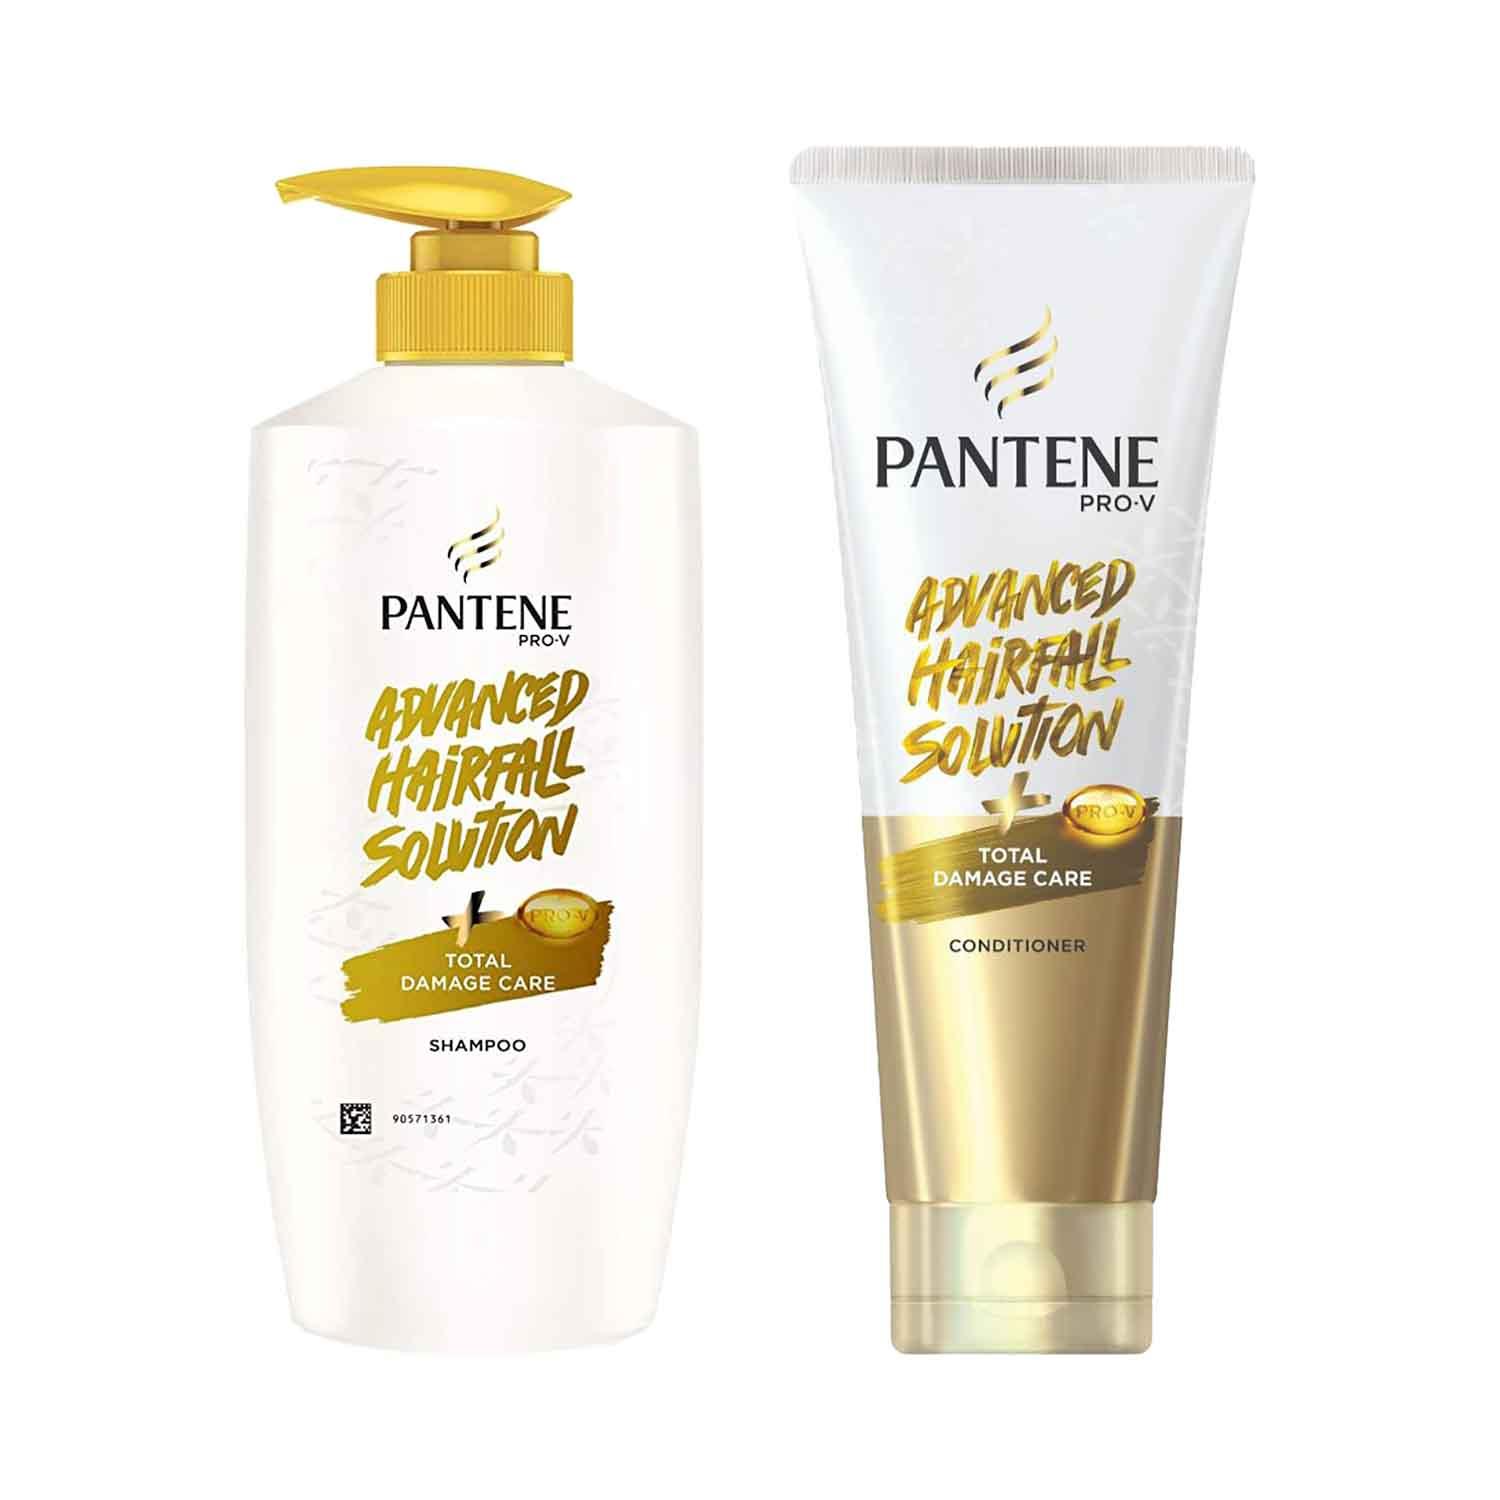 Pantene Advanced Hairfall Solution and Pantene Advanced Hair Fall Solution Total Damage Care Combo